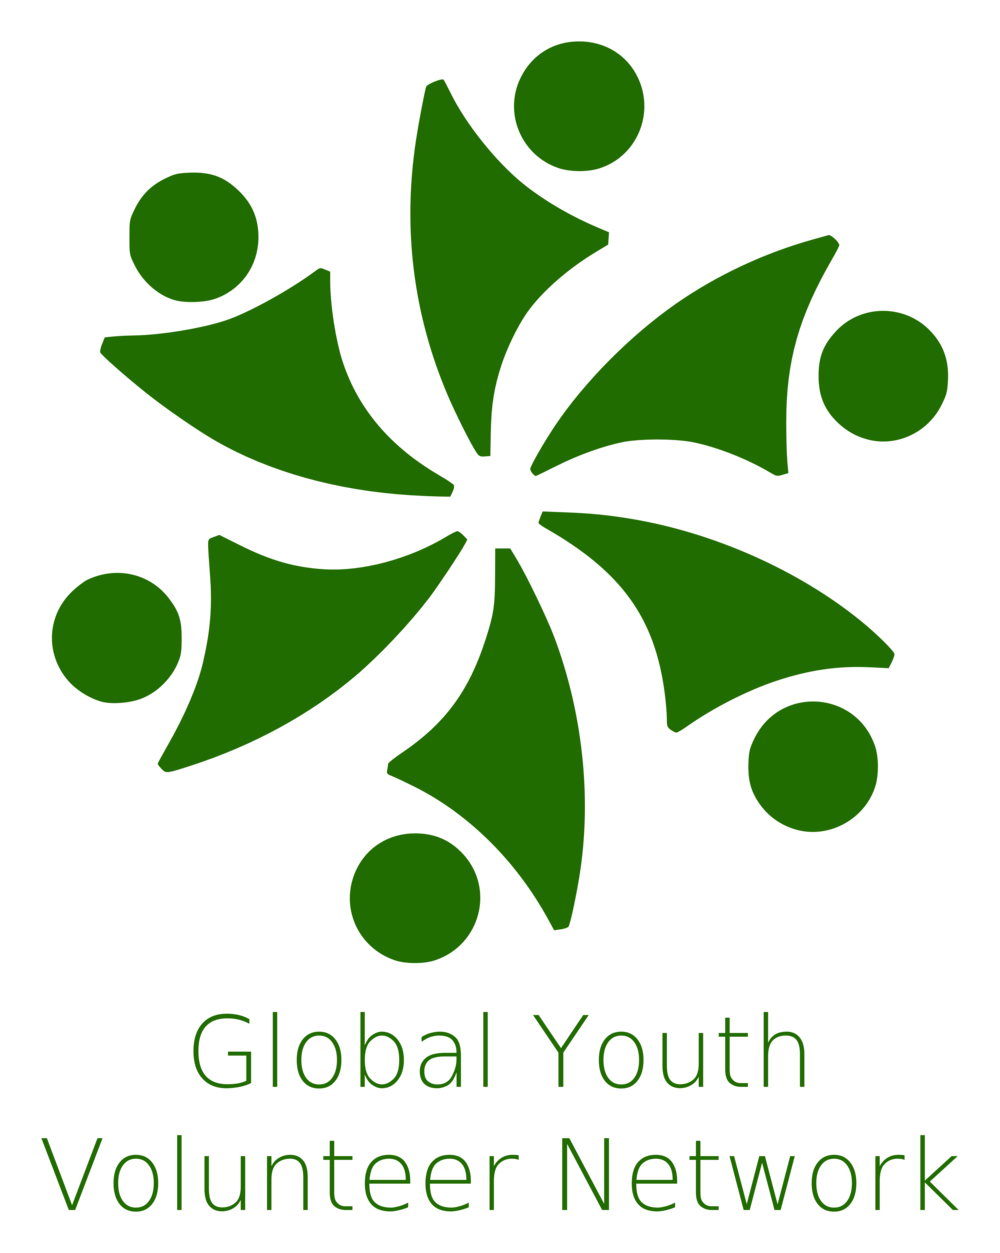 Global Youth Volunteer Network Logo.png